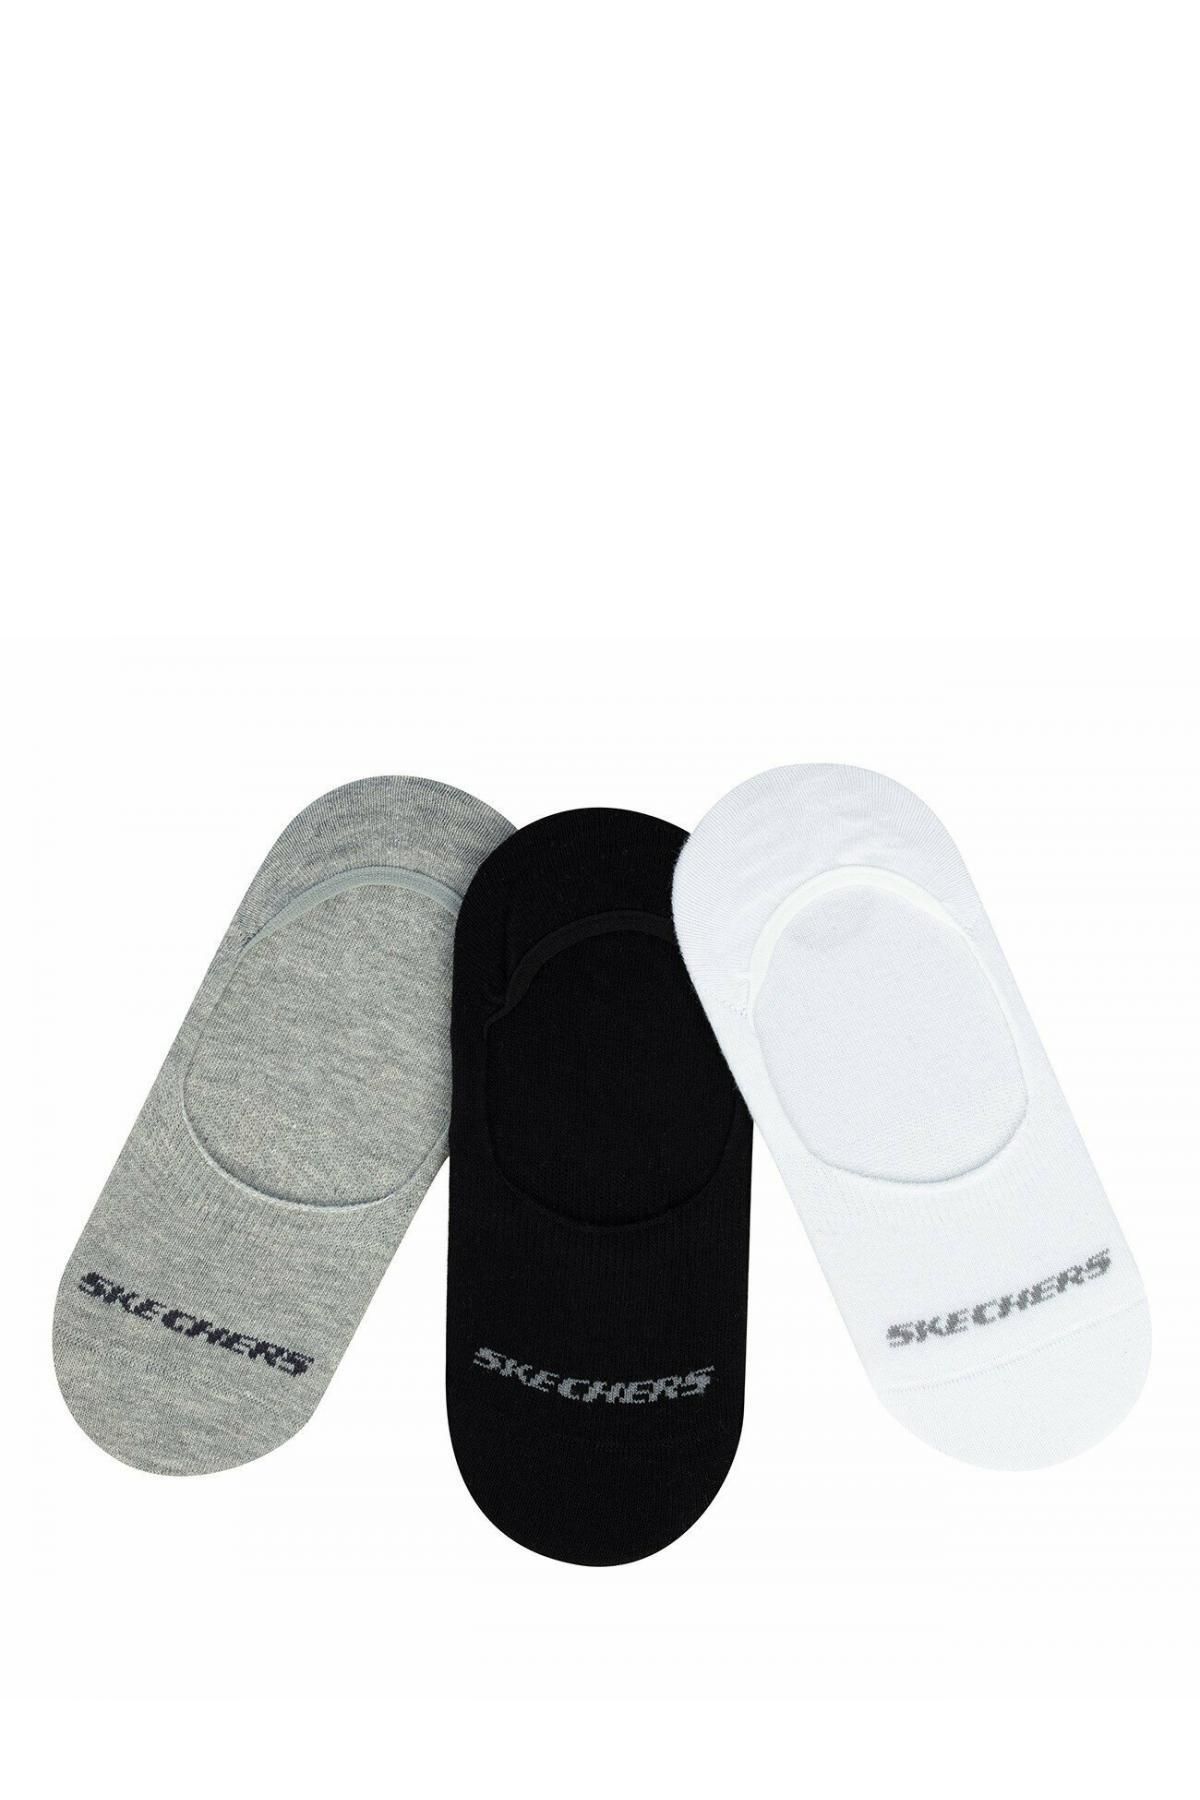 Skechers S192134 Show Socks 3 Pack Çok Renkli Unisex Çorap